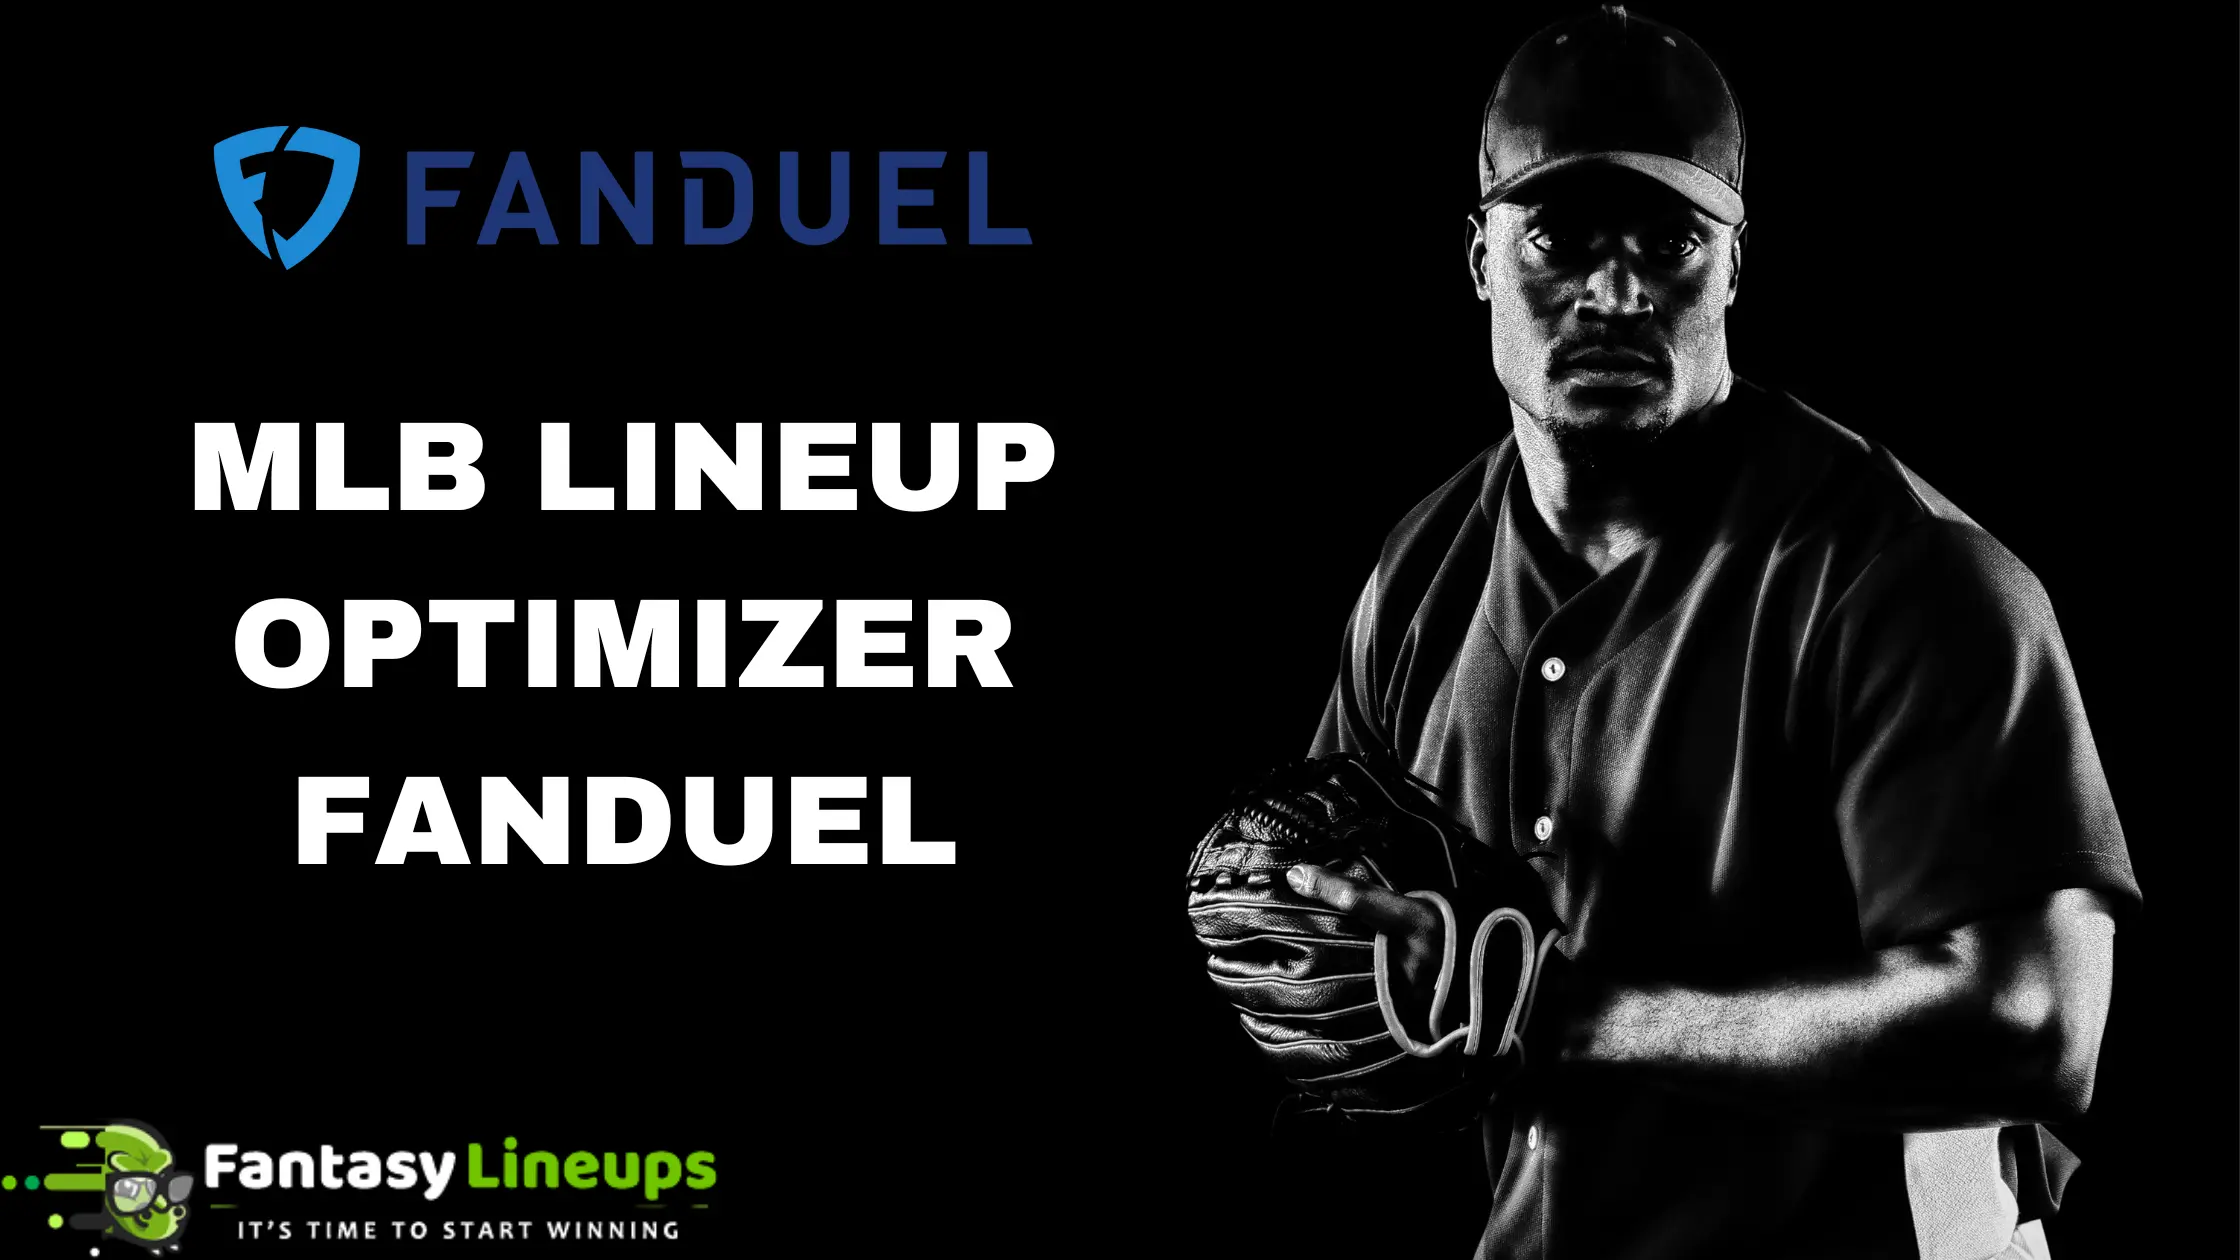 Use an MLB lineup optimizer to maximize your FanDuel success.